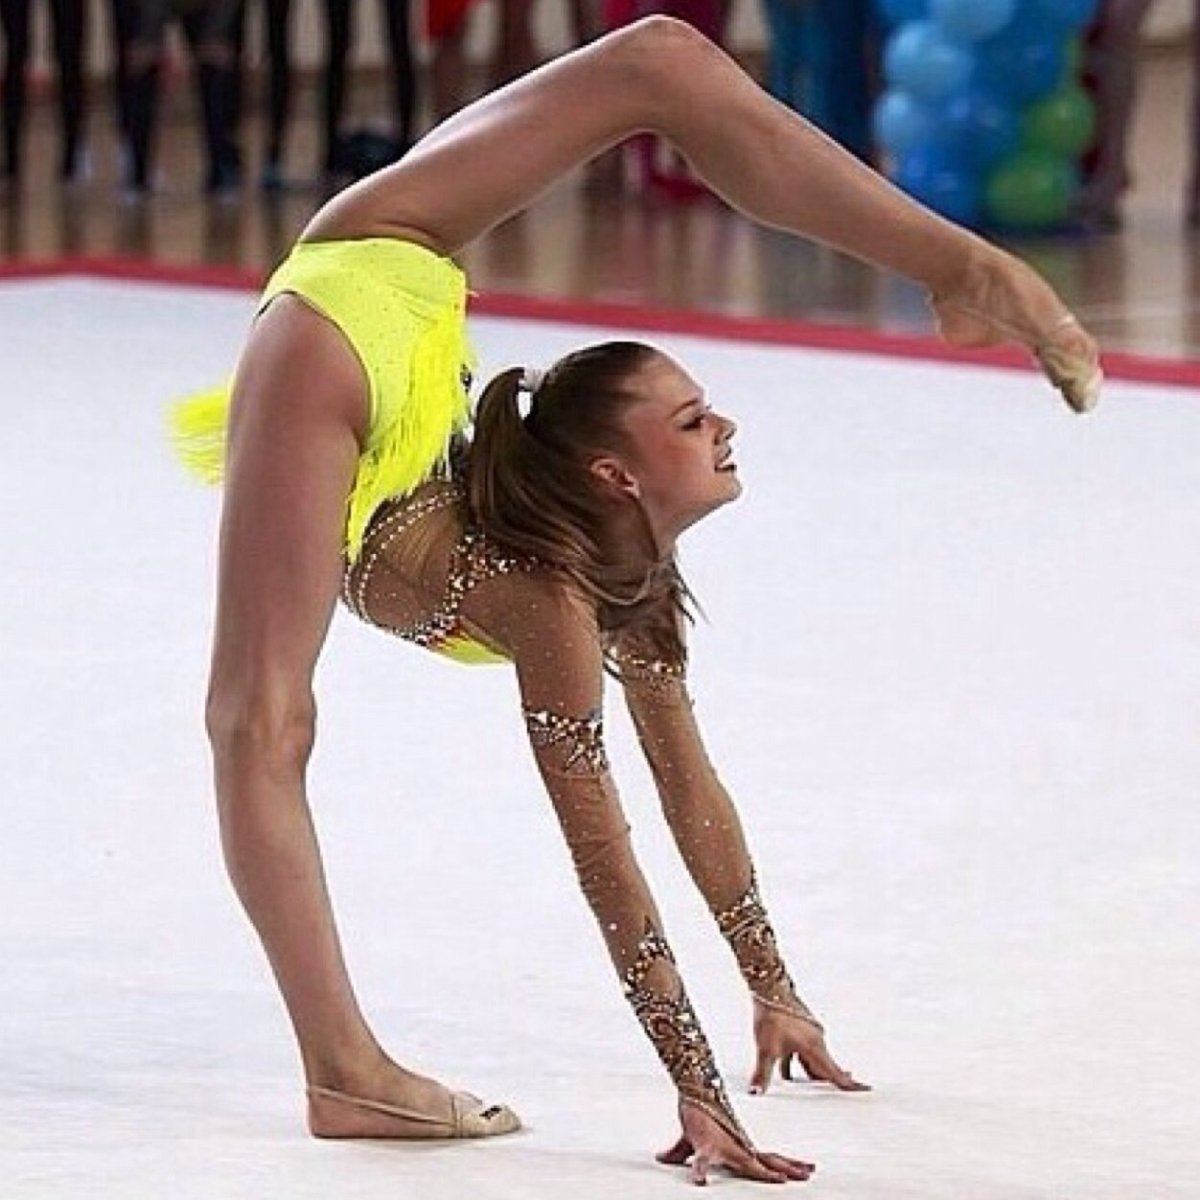 Солдатова Саша гимнастка